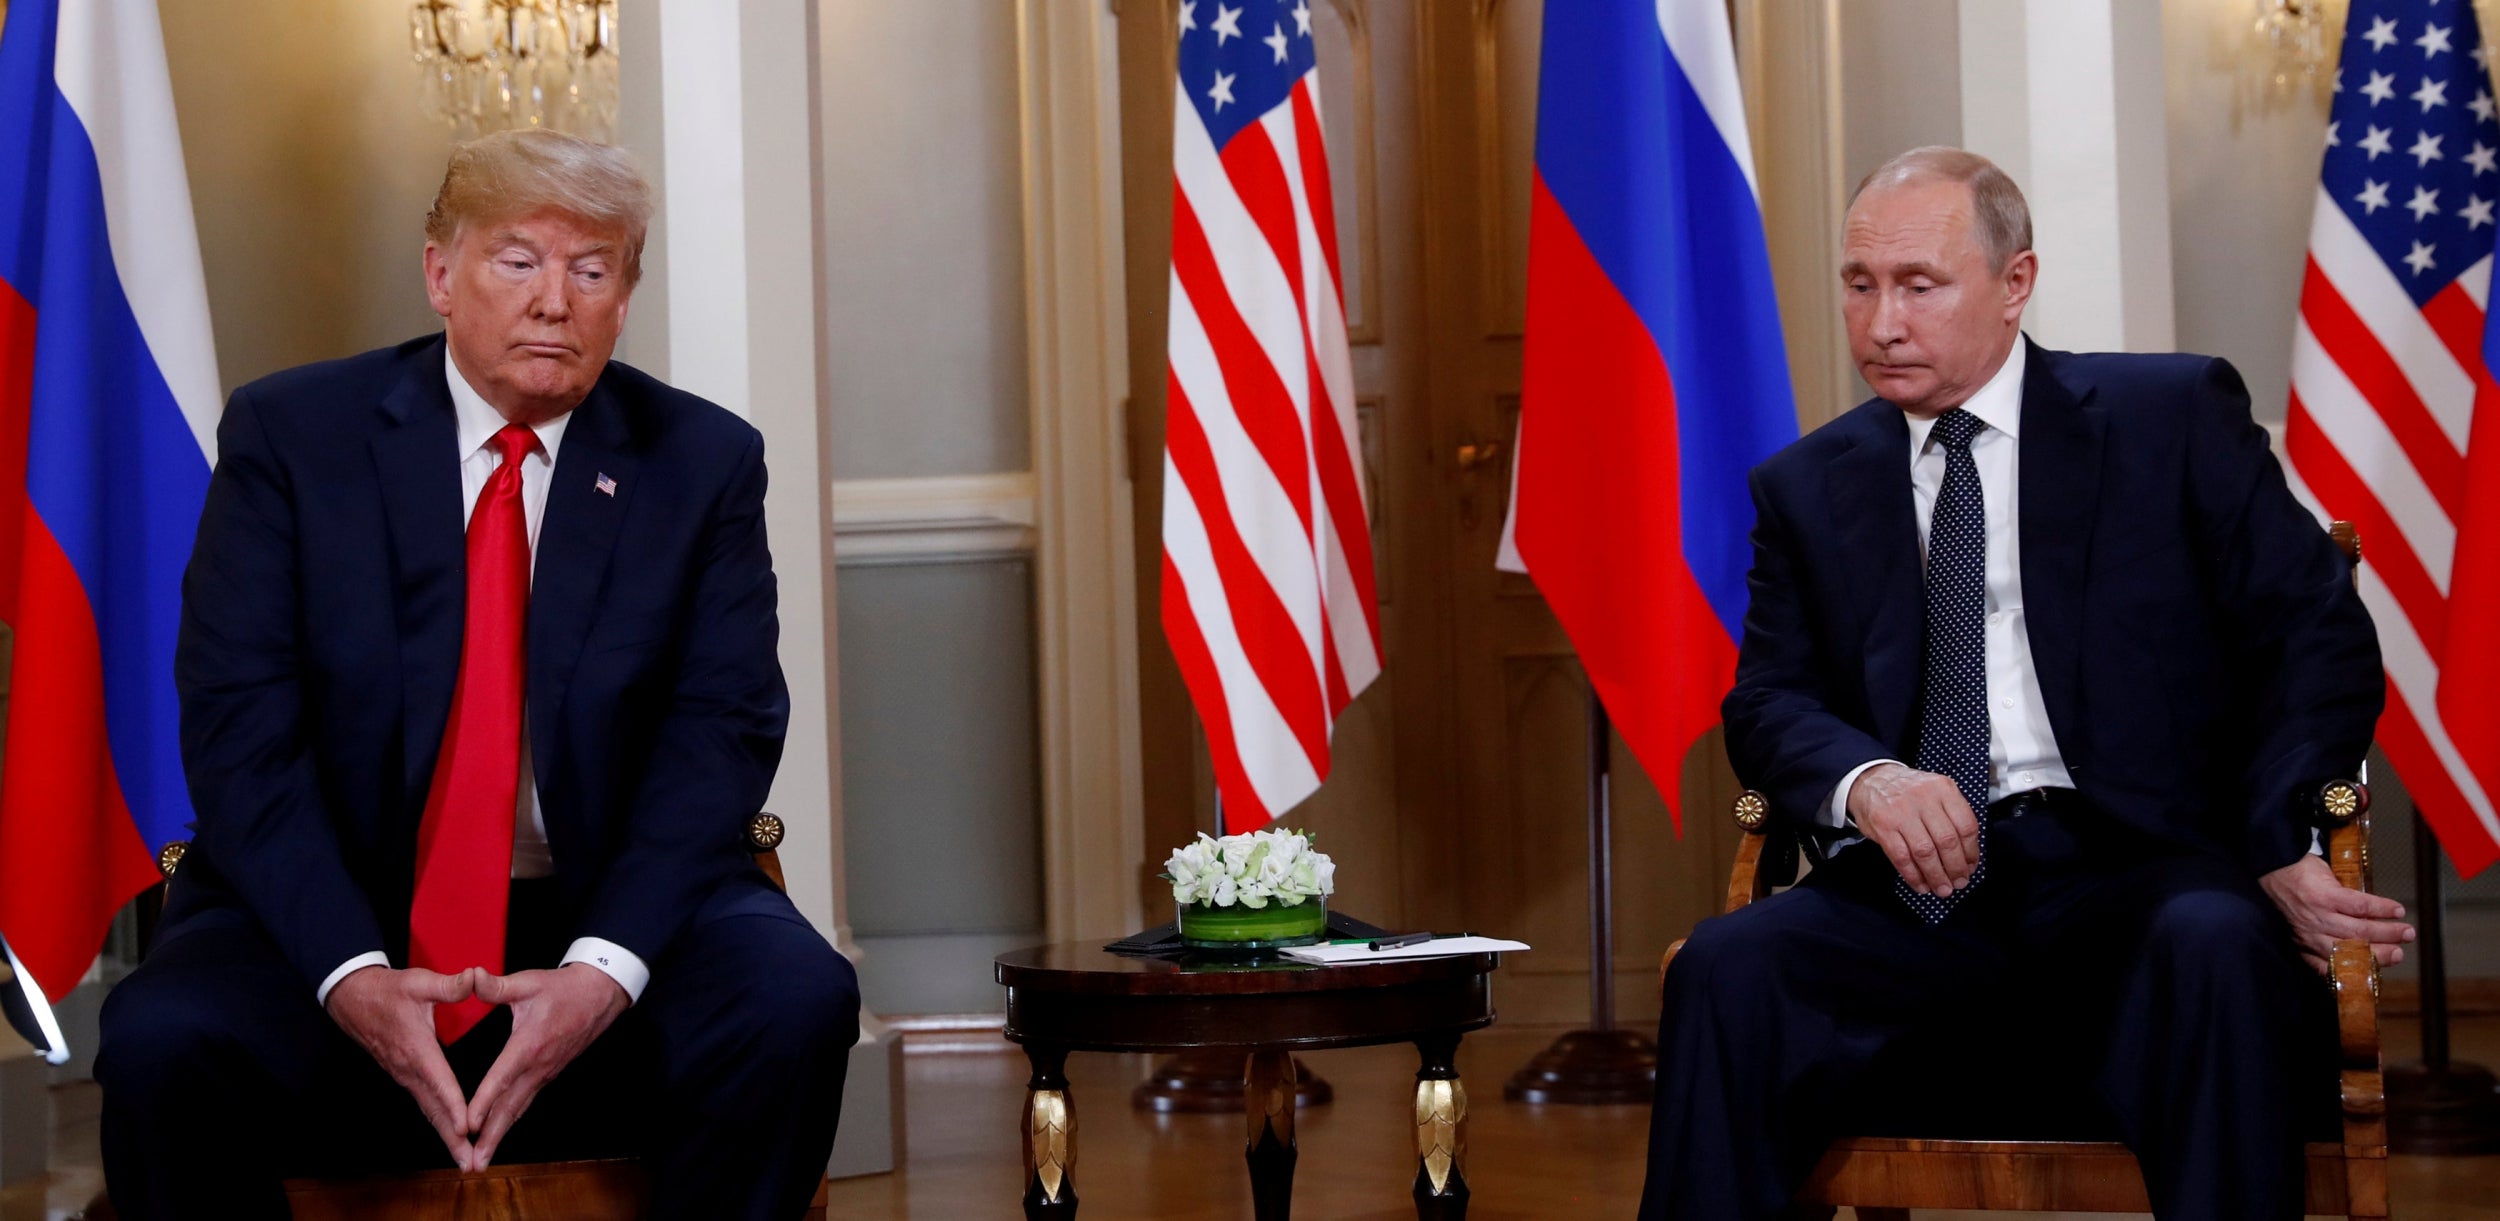 Donald Trump and Vladimir Putin at a summit in Helsinki in 2018